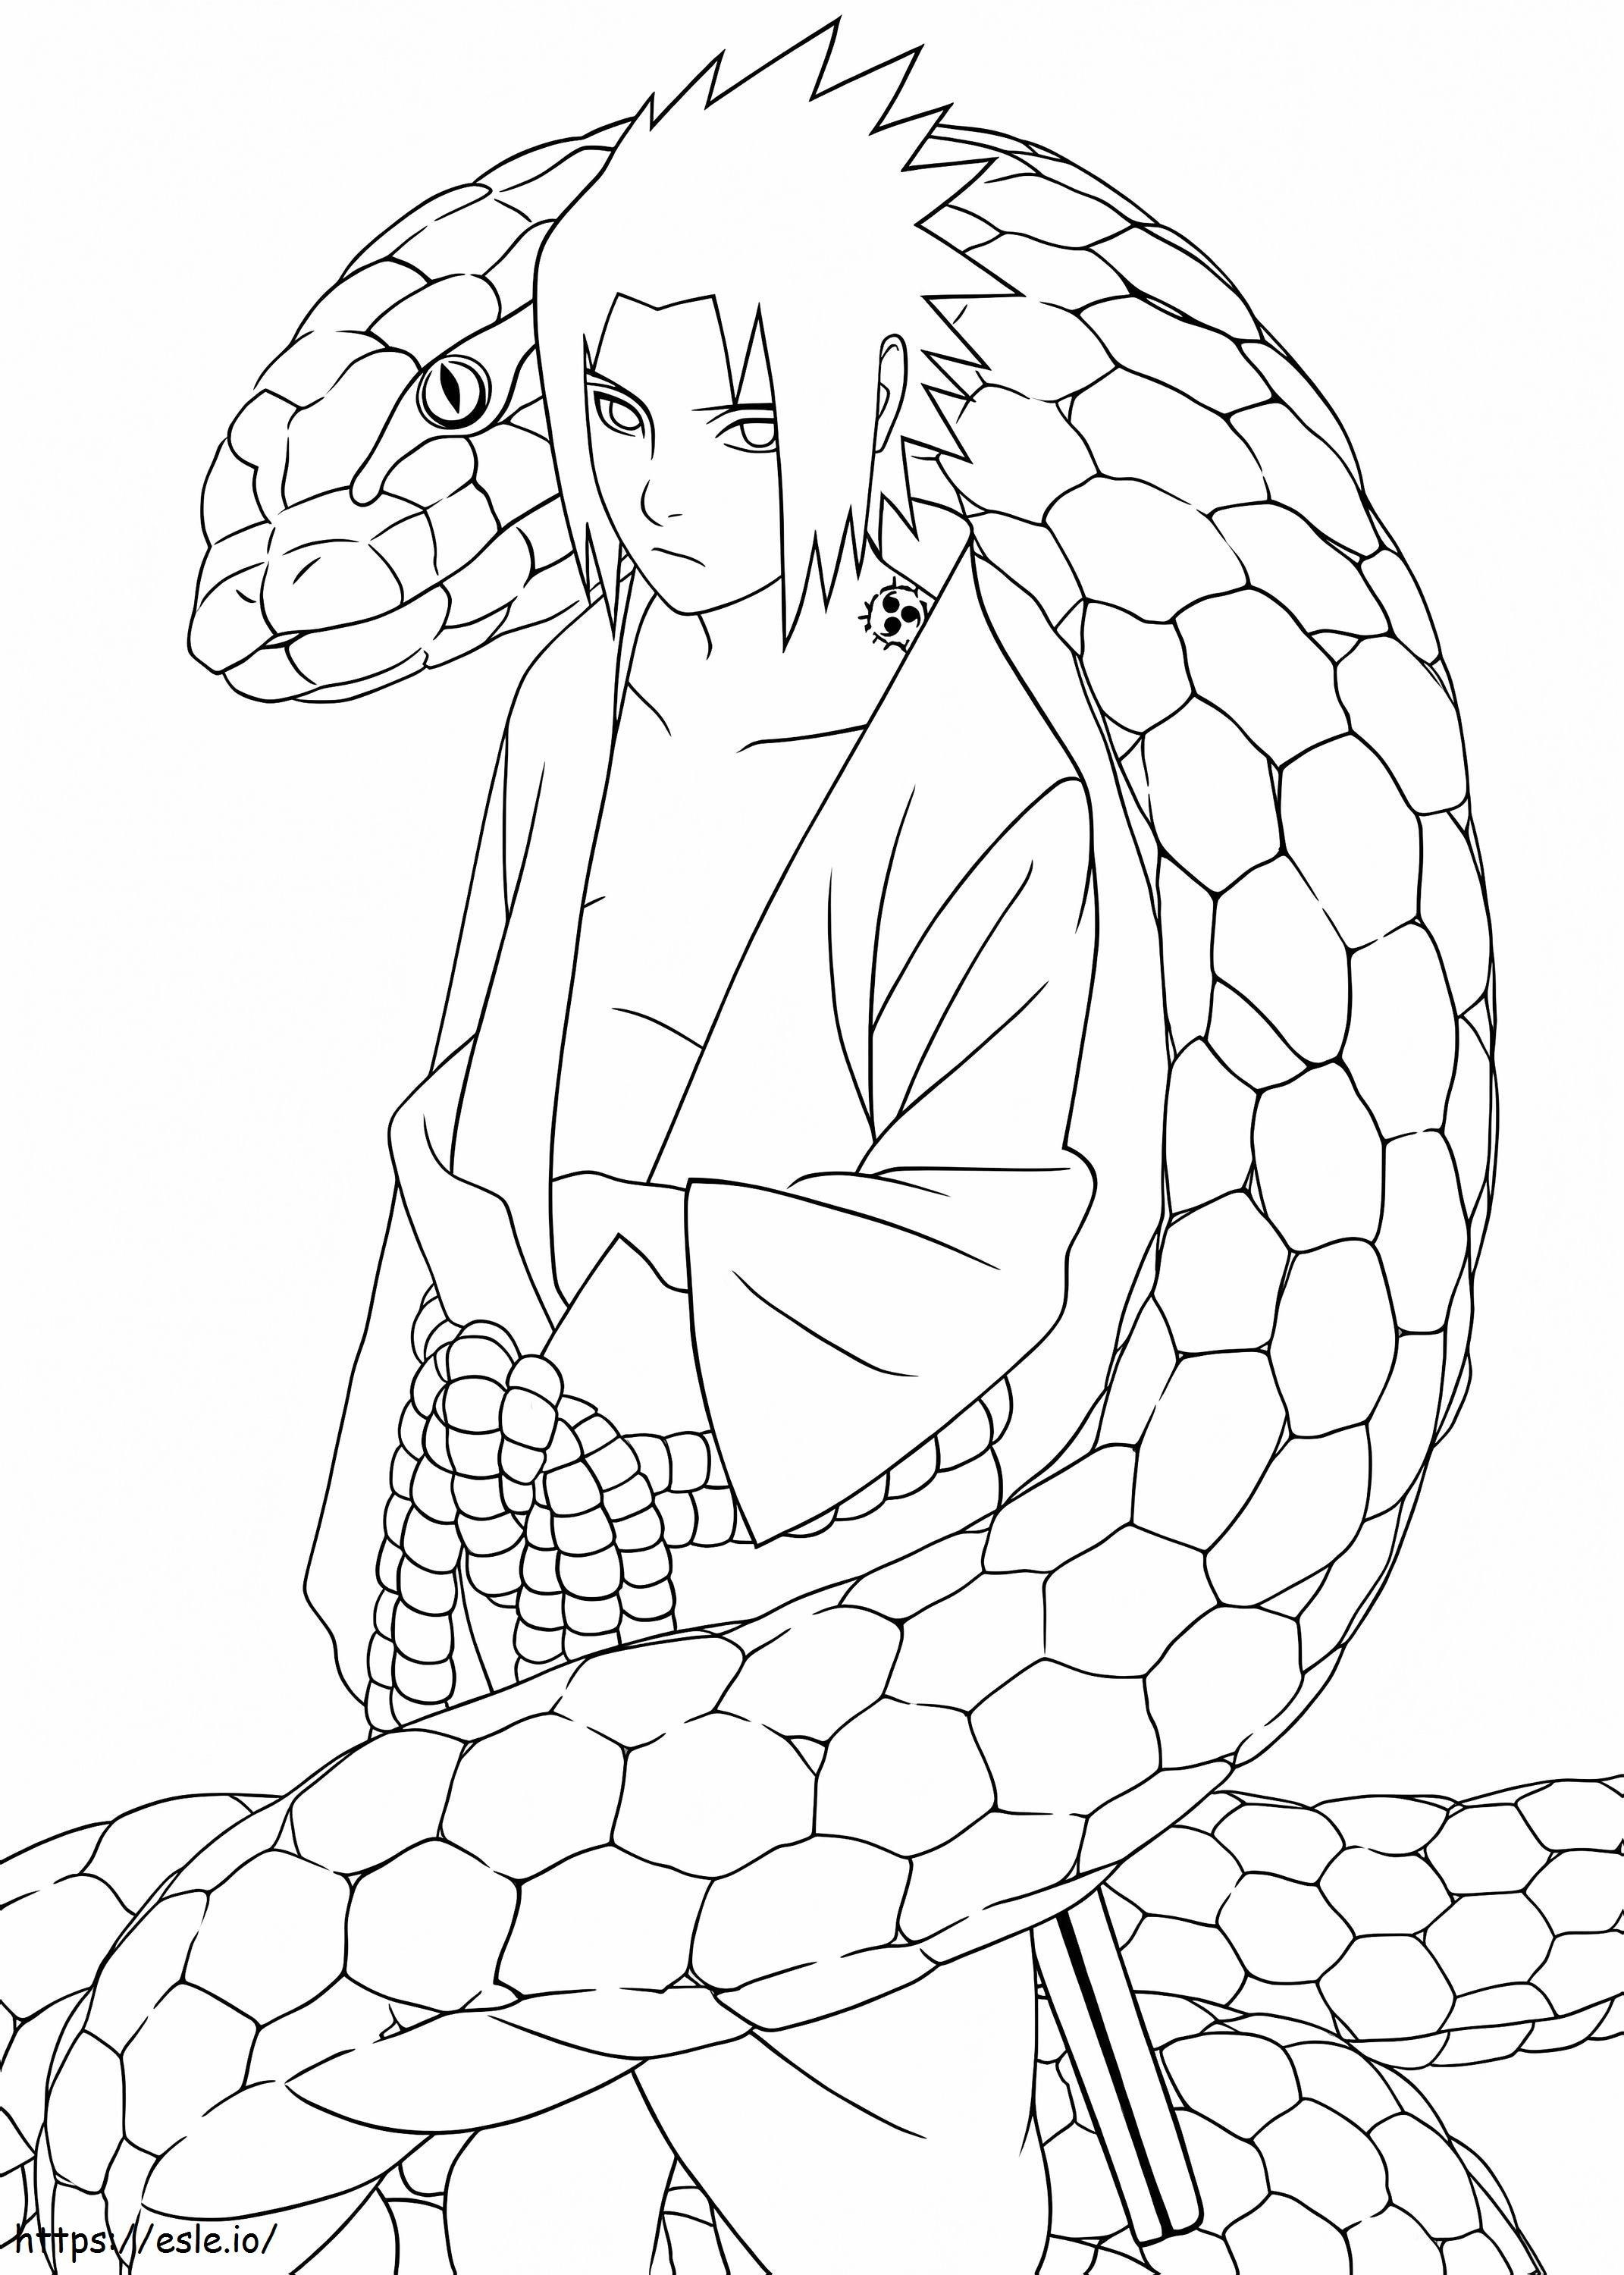 Sasuke Uchiha z Una Pitonem kolorowanka